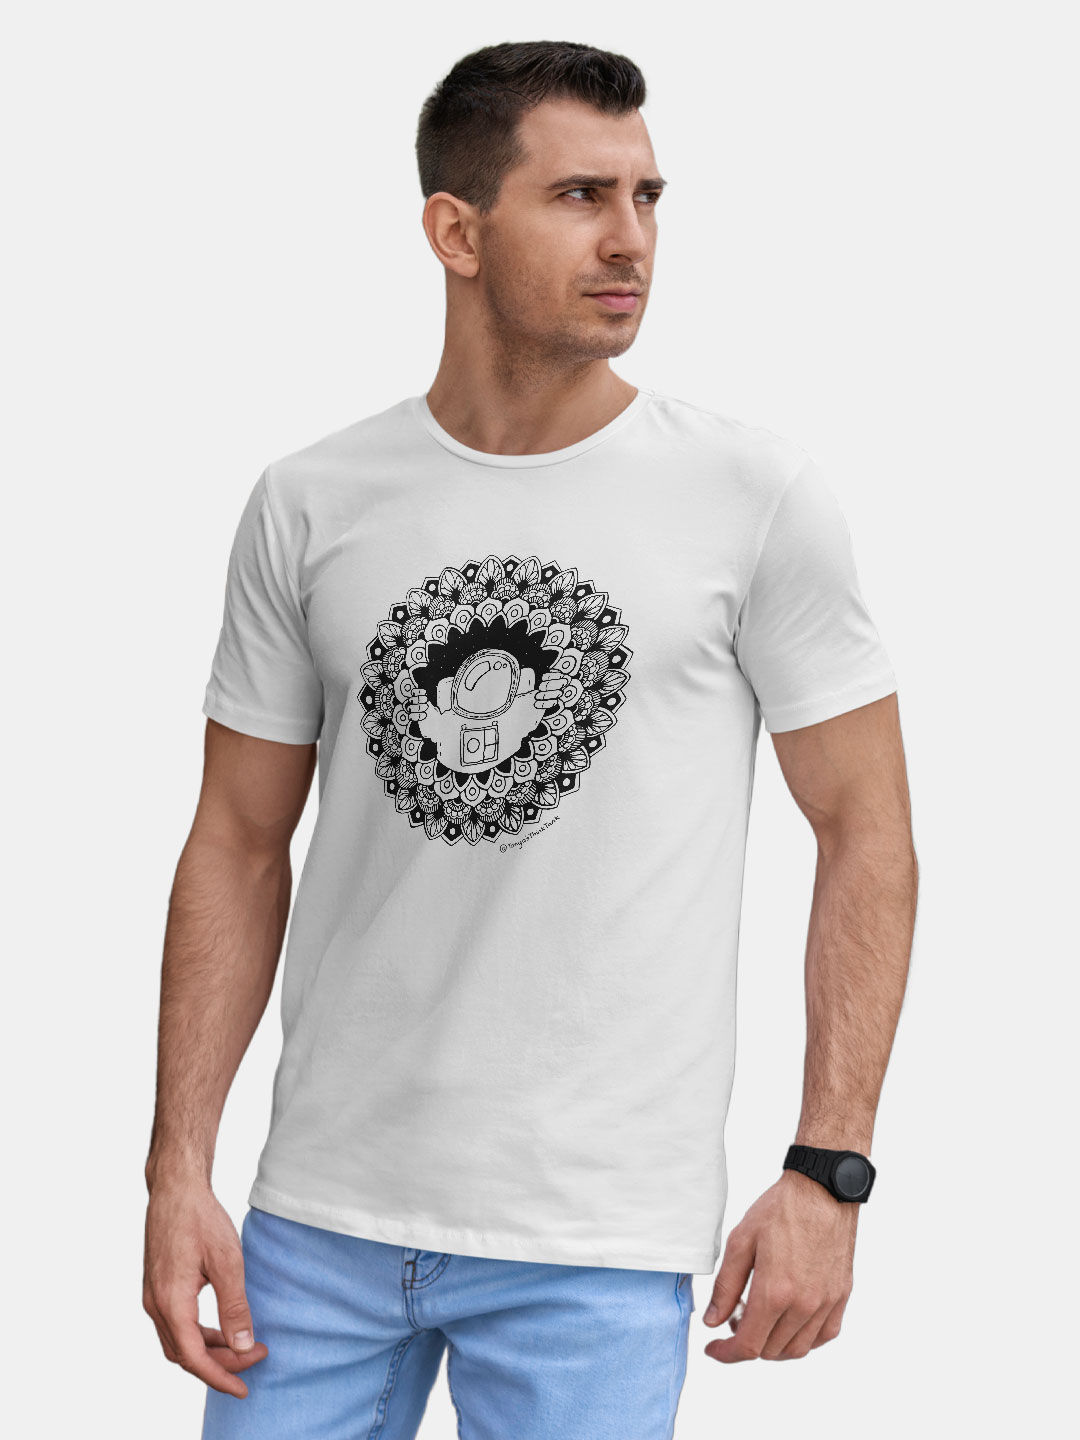 Buy Astronaut Peeking White - Male Designer T-Shirts T-Shirts Online